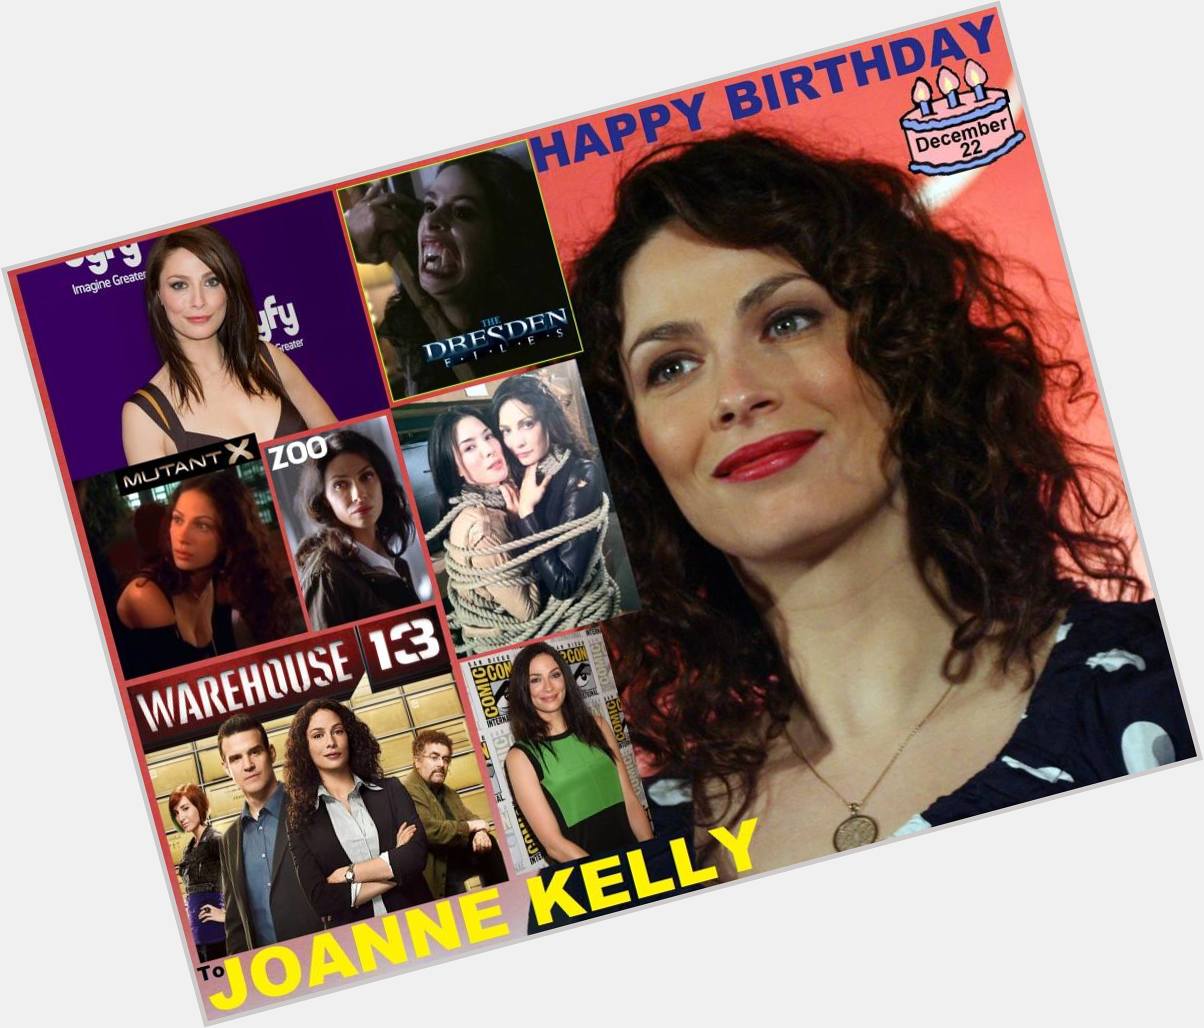 Happy birthday to Joanne Kelly, born December 22, 1978.  